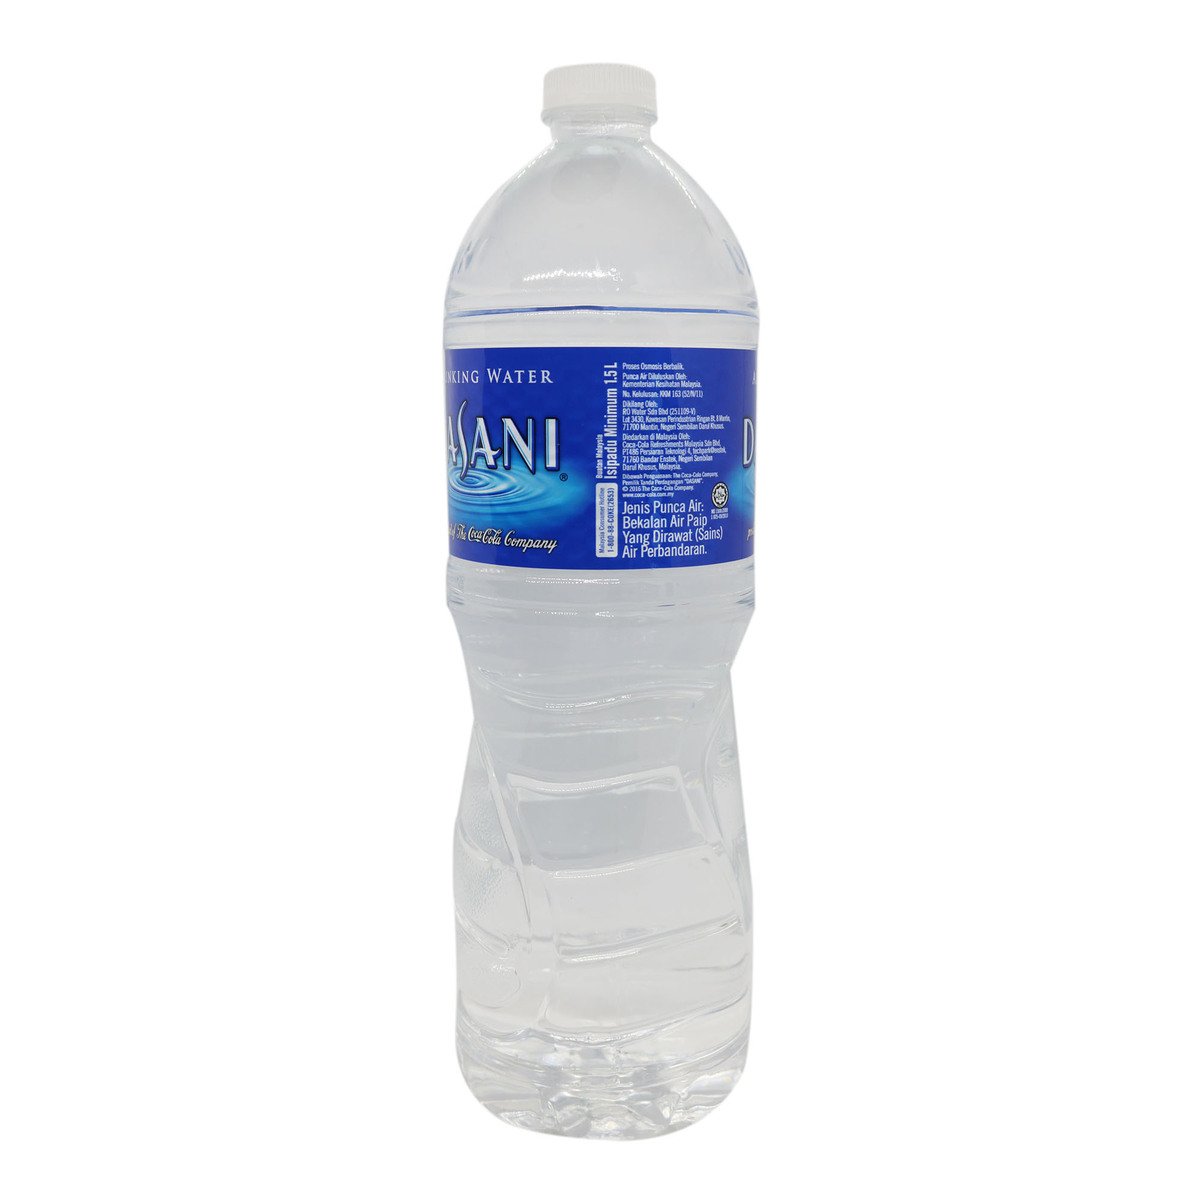 Dasani Drinking Water 1.5Litre